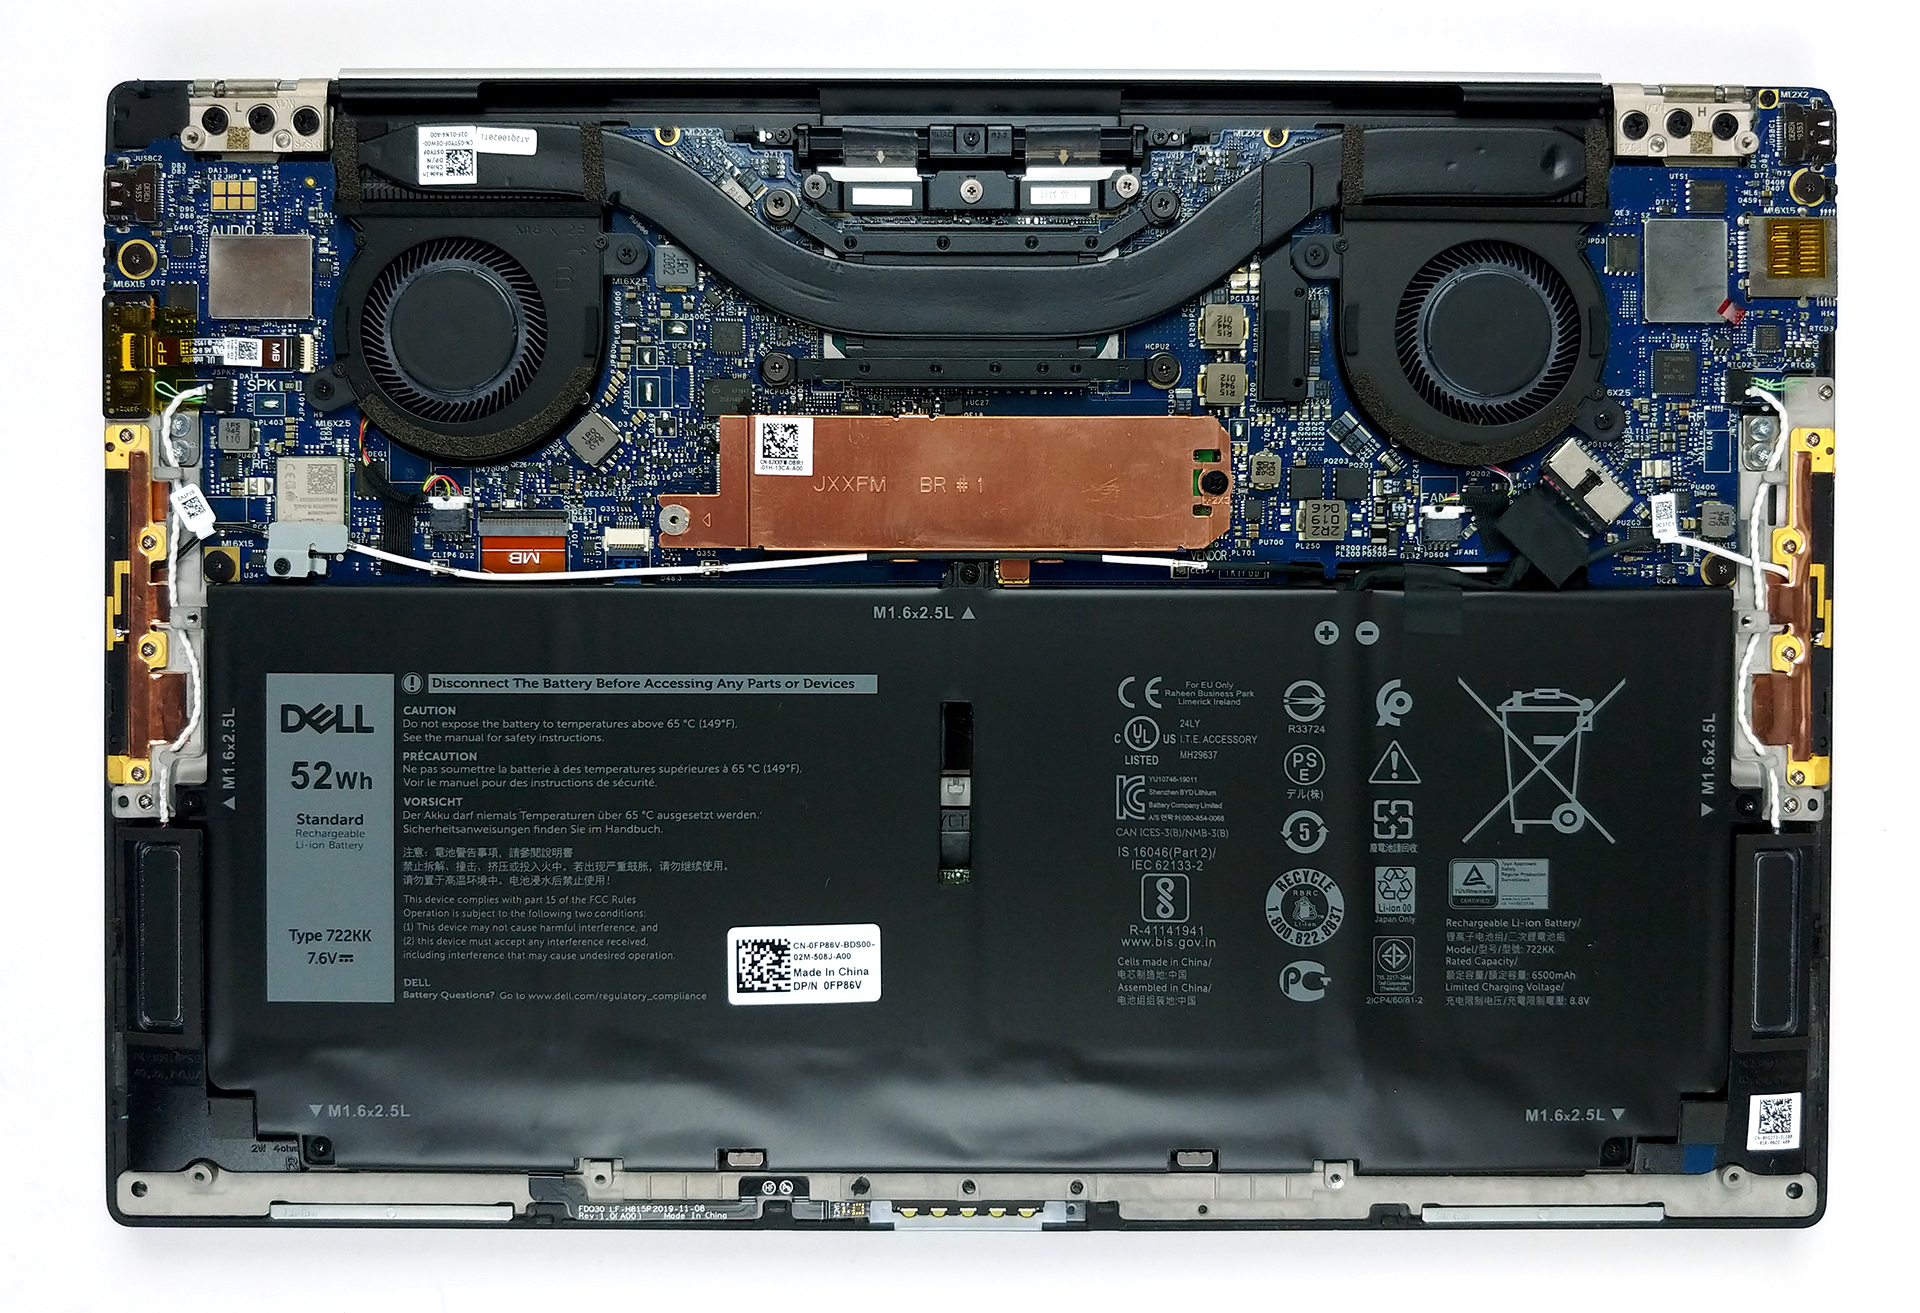 Inside Dell XPS 9300 - disassembly options | LaptopMedia.com